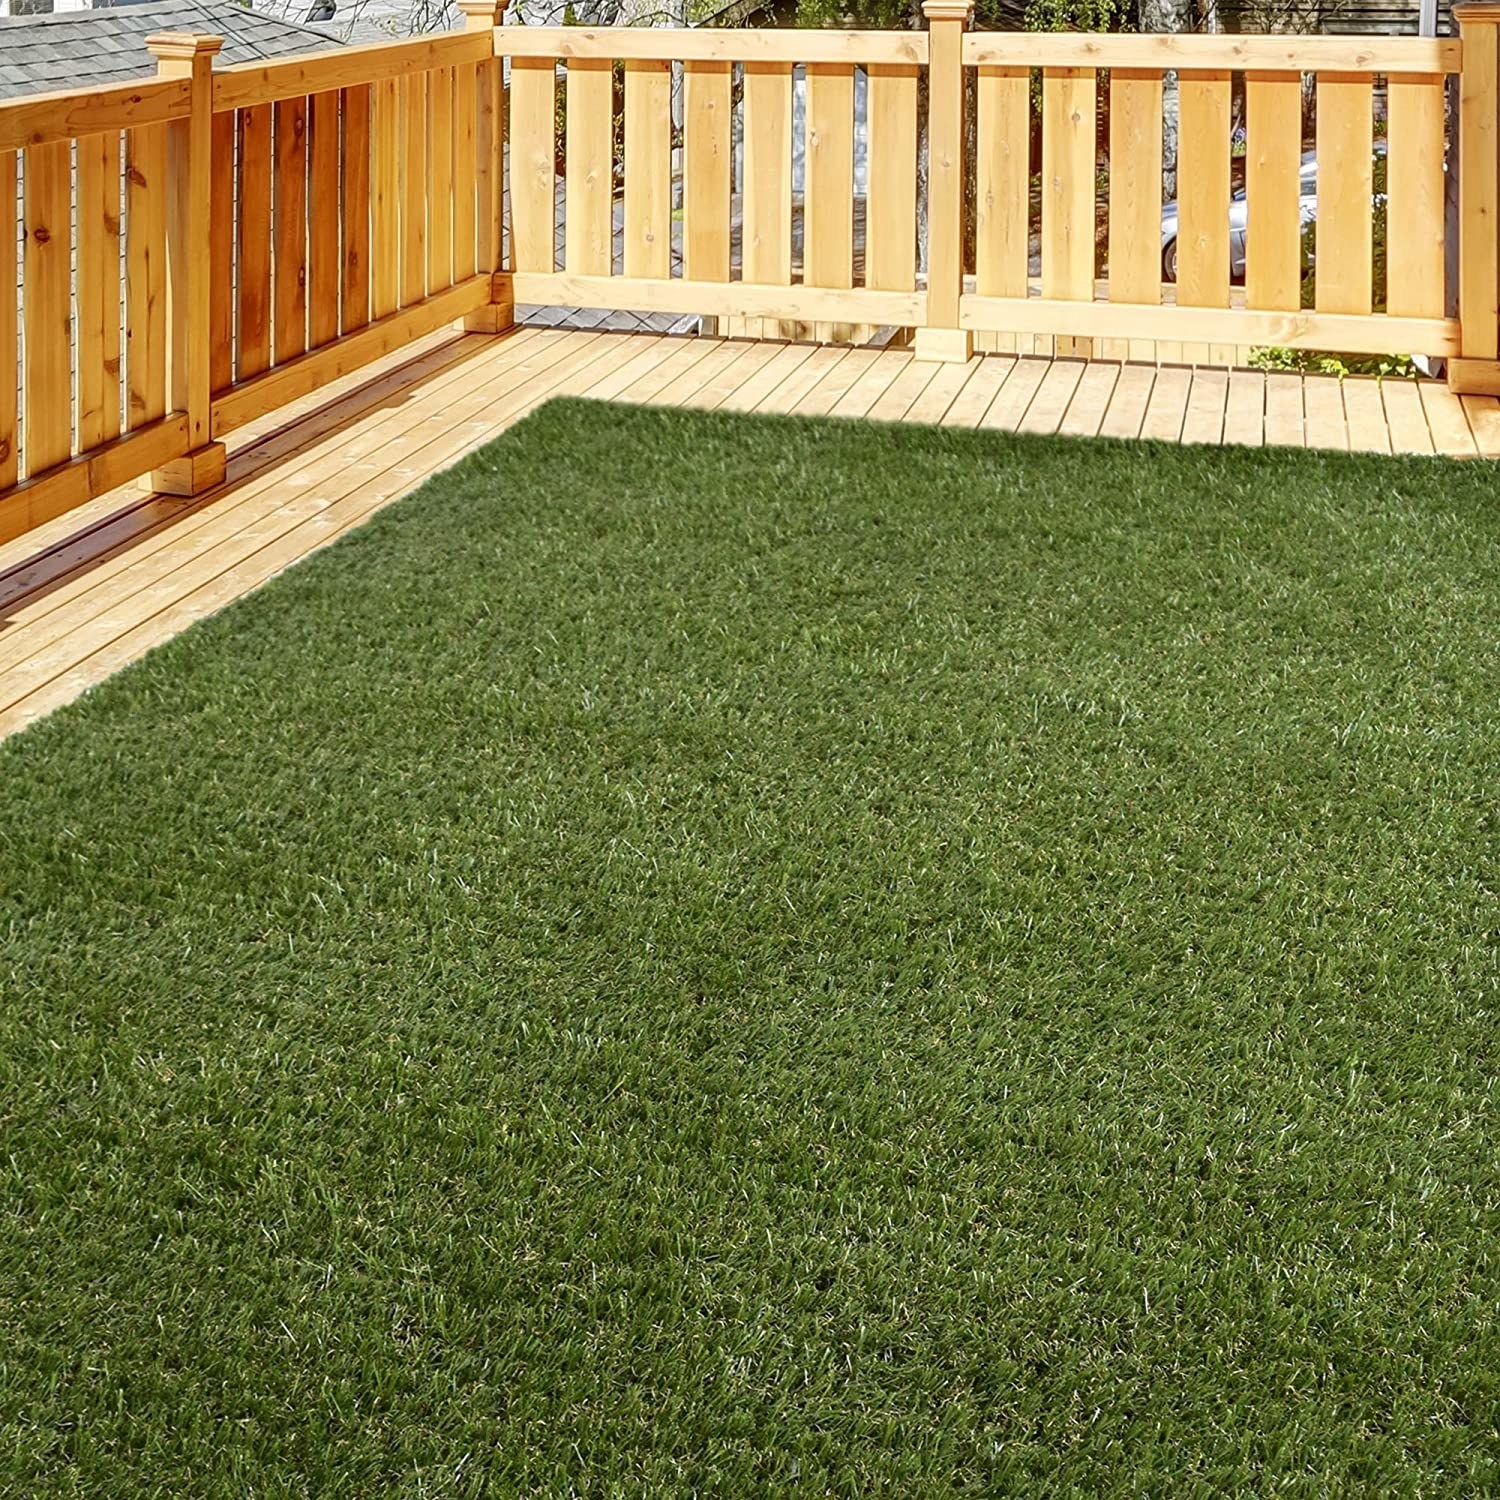 the grass on a deck